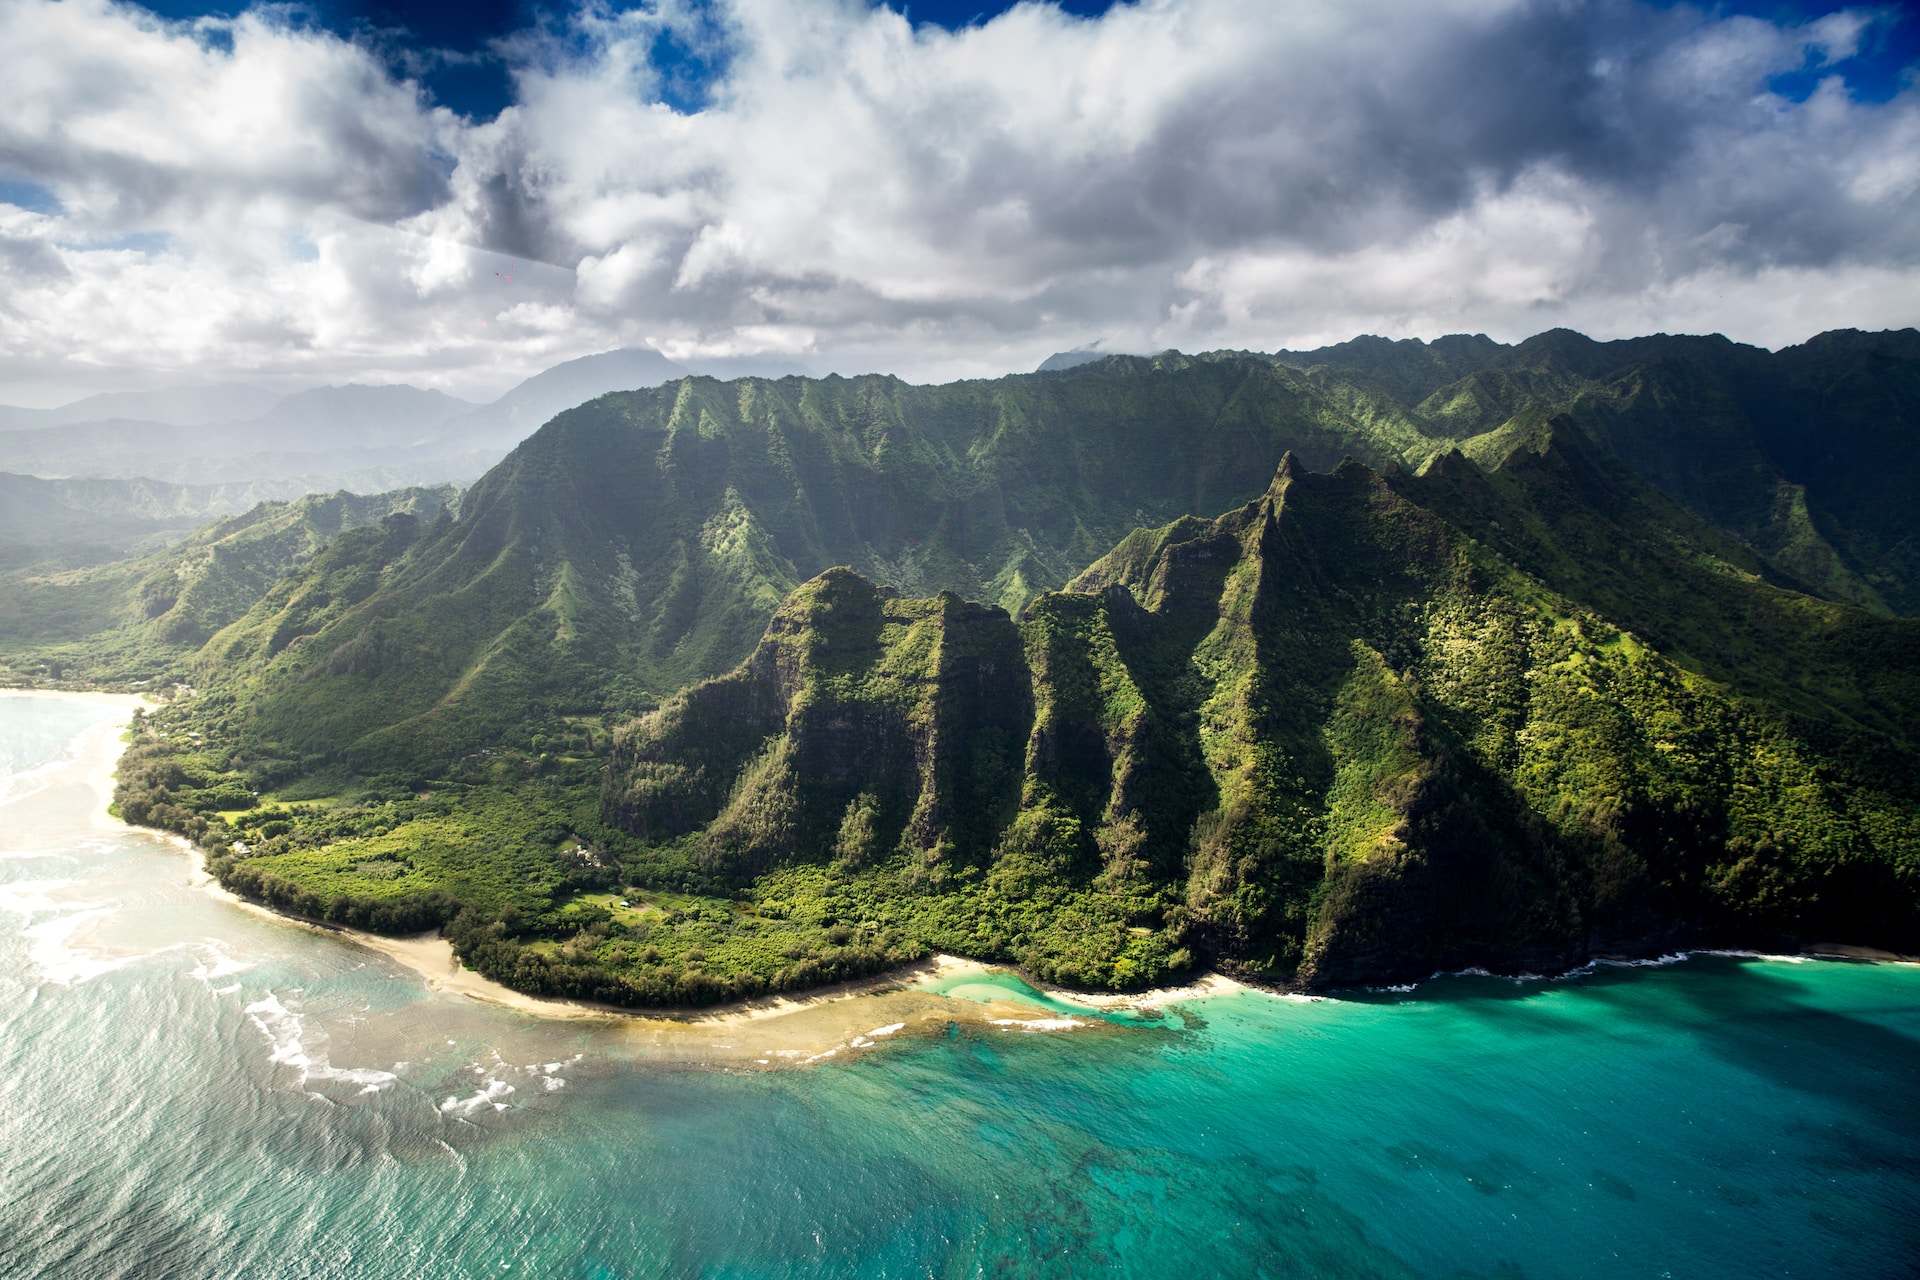 Kauai Hawaii warm winter destinations in the US